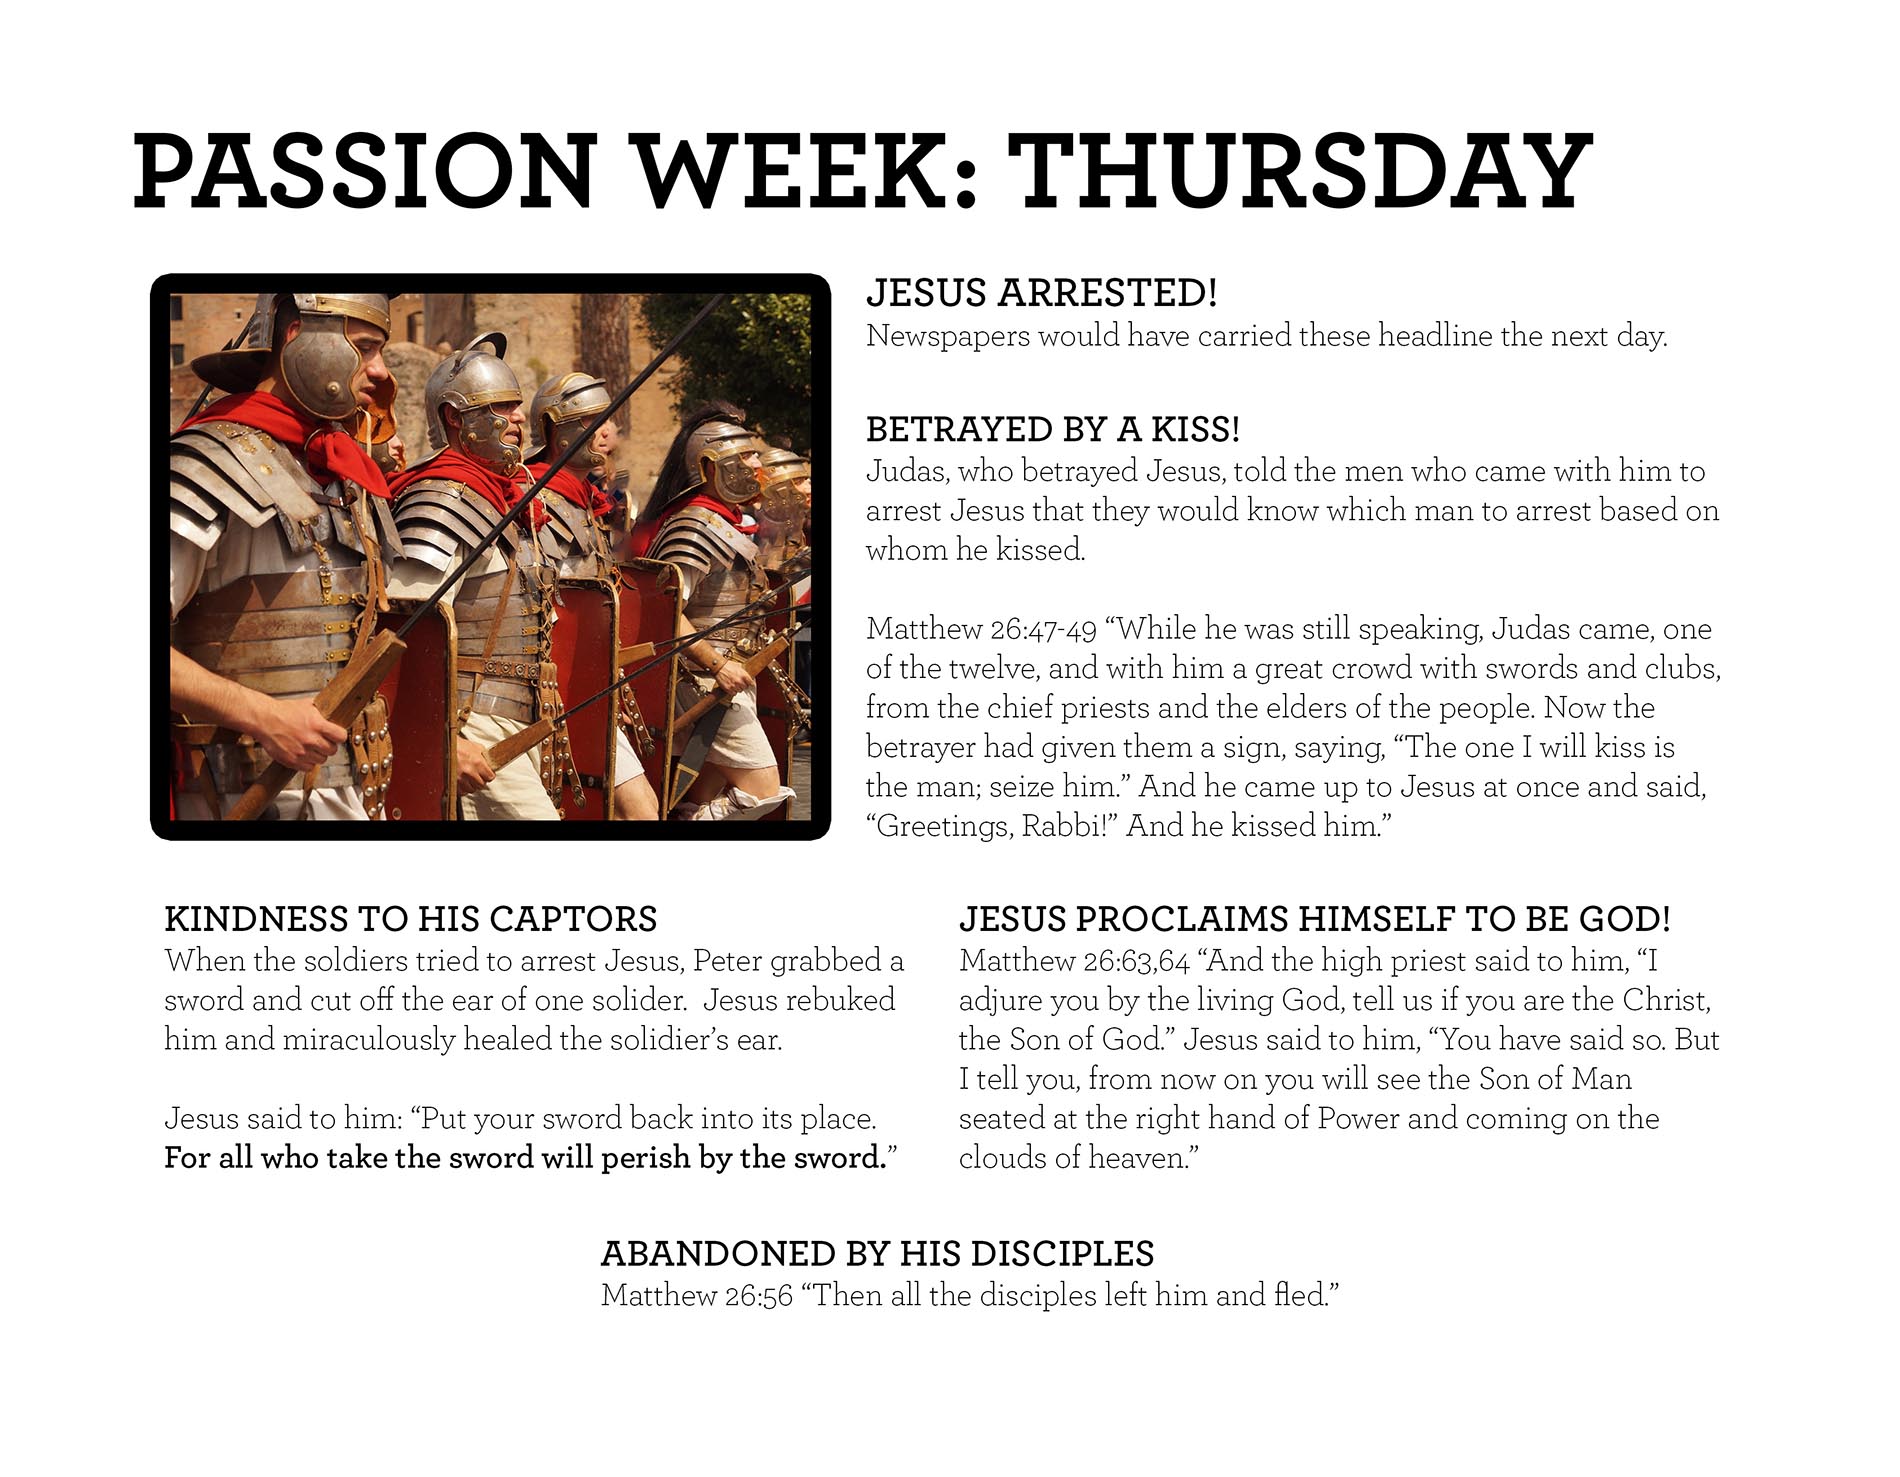 PASSION WEEK: THURSDAY Matthew 26:47-49